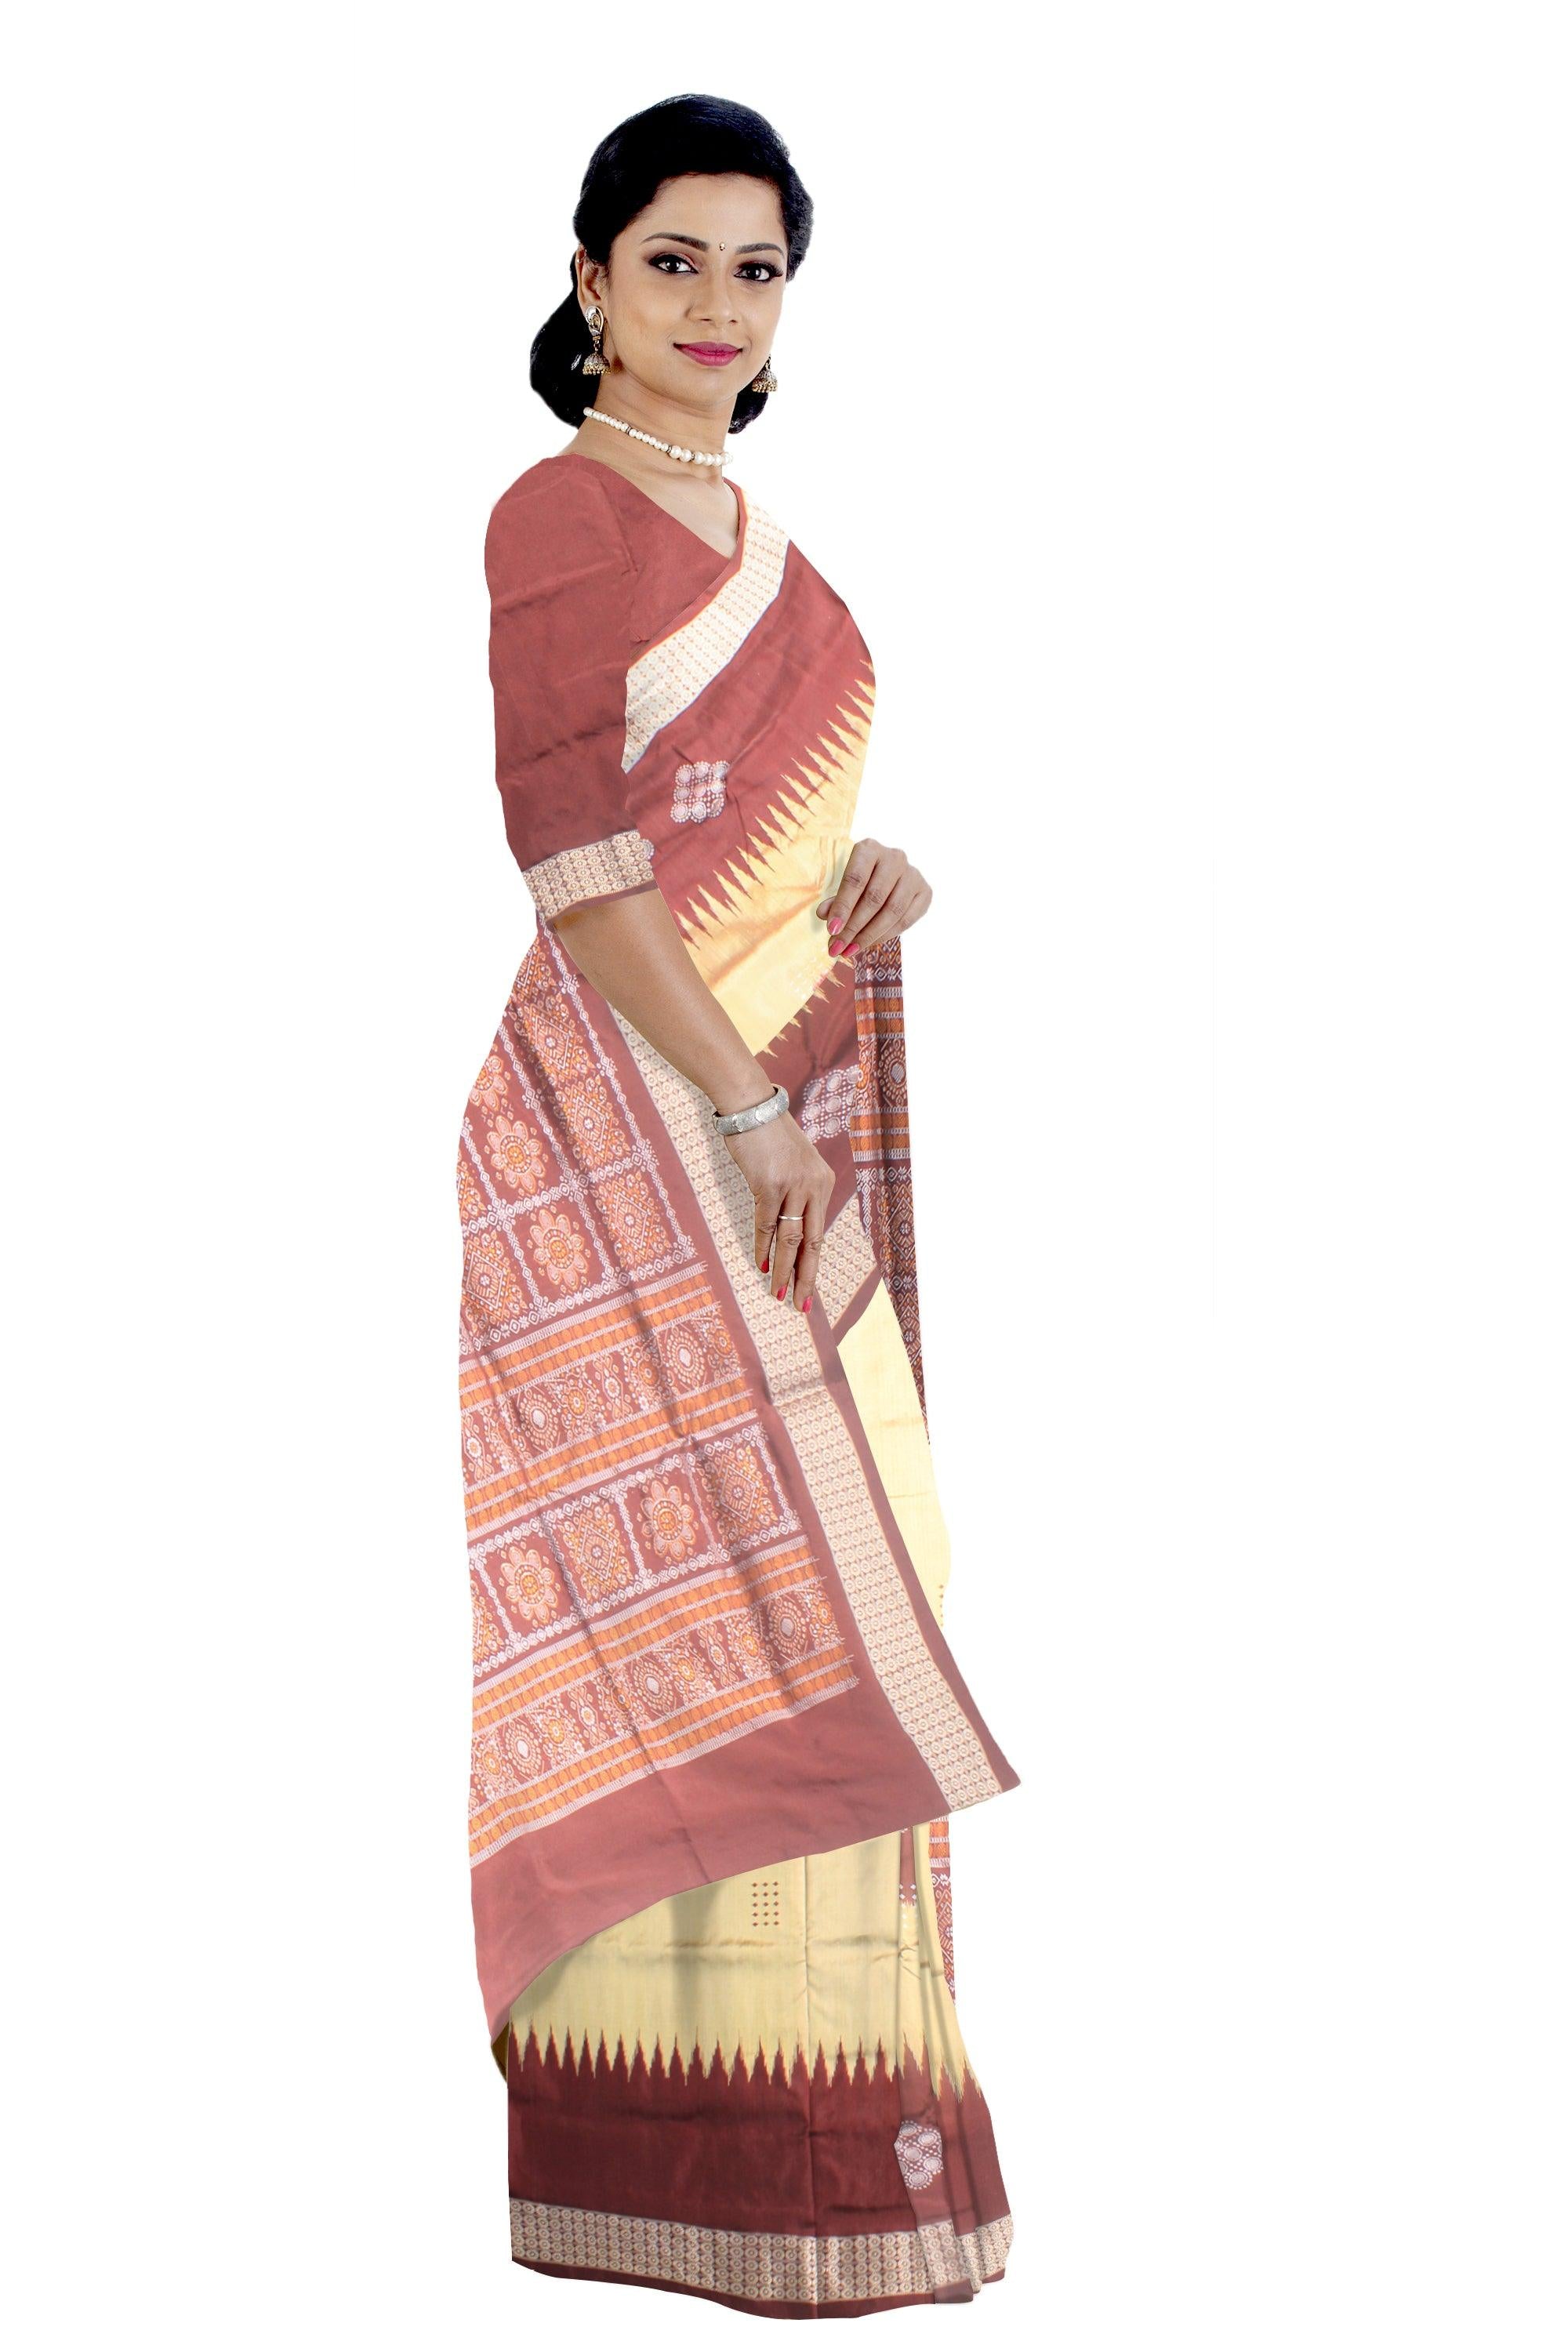 A sambalpuri  pata saree in Golden (peach) and maroon color, with blouse piece. - Koshali Arts & Crafts Enterprise